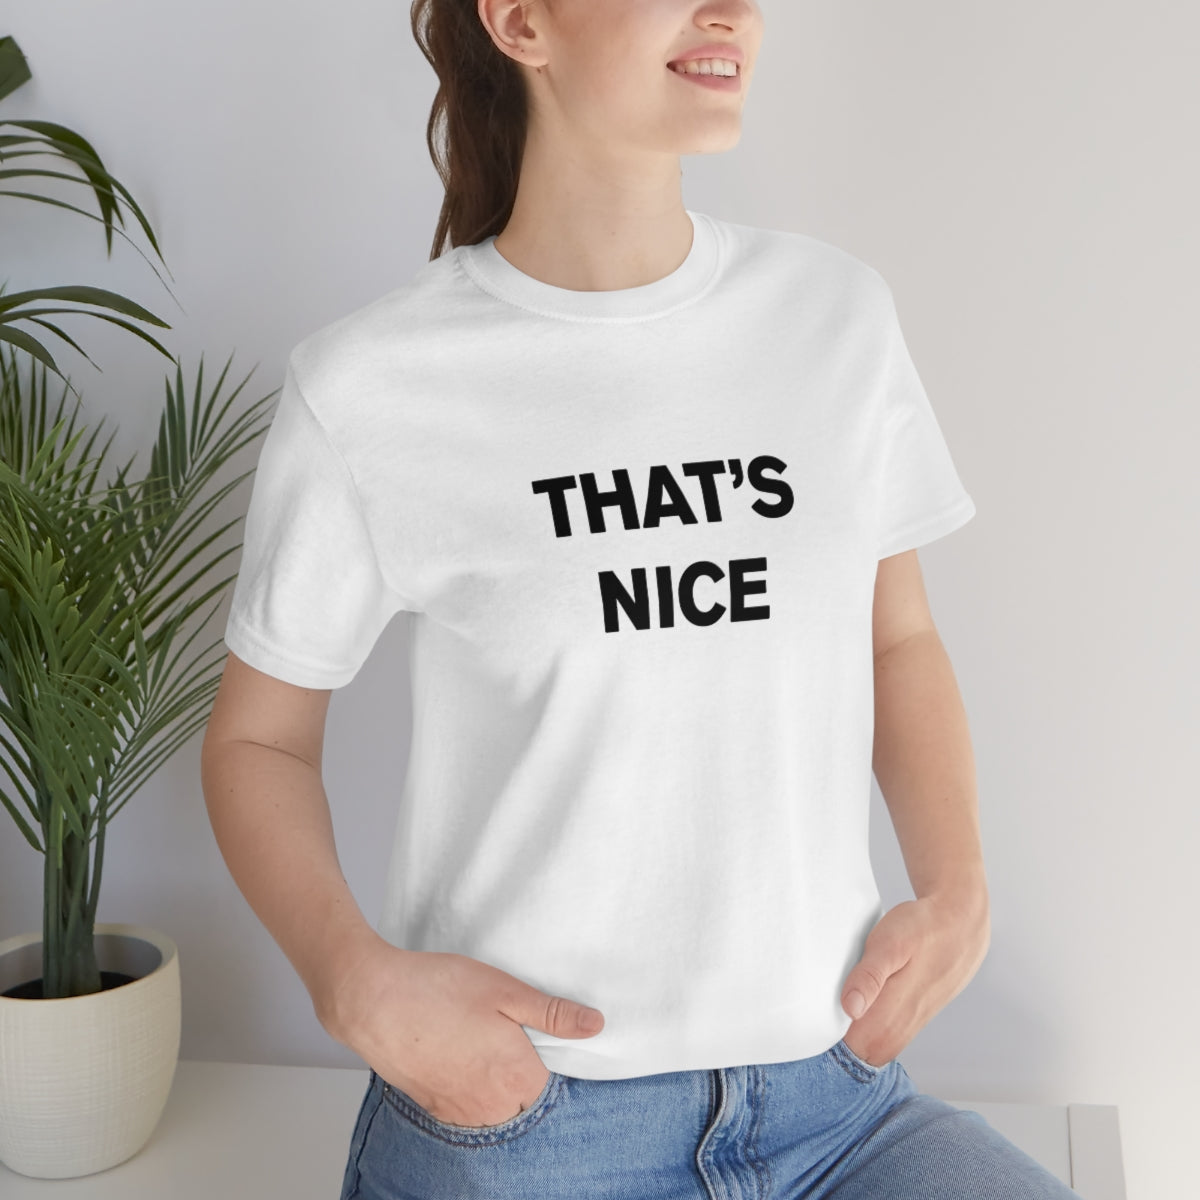 THAT'S NICE - t-shirt